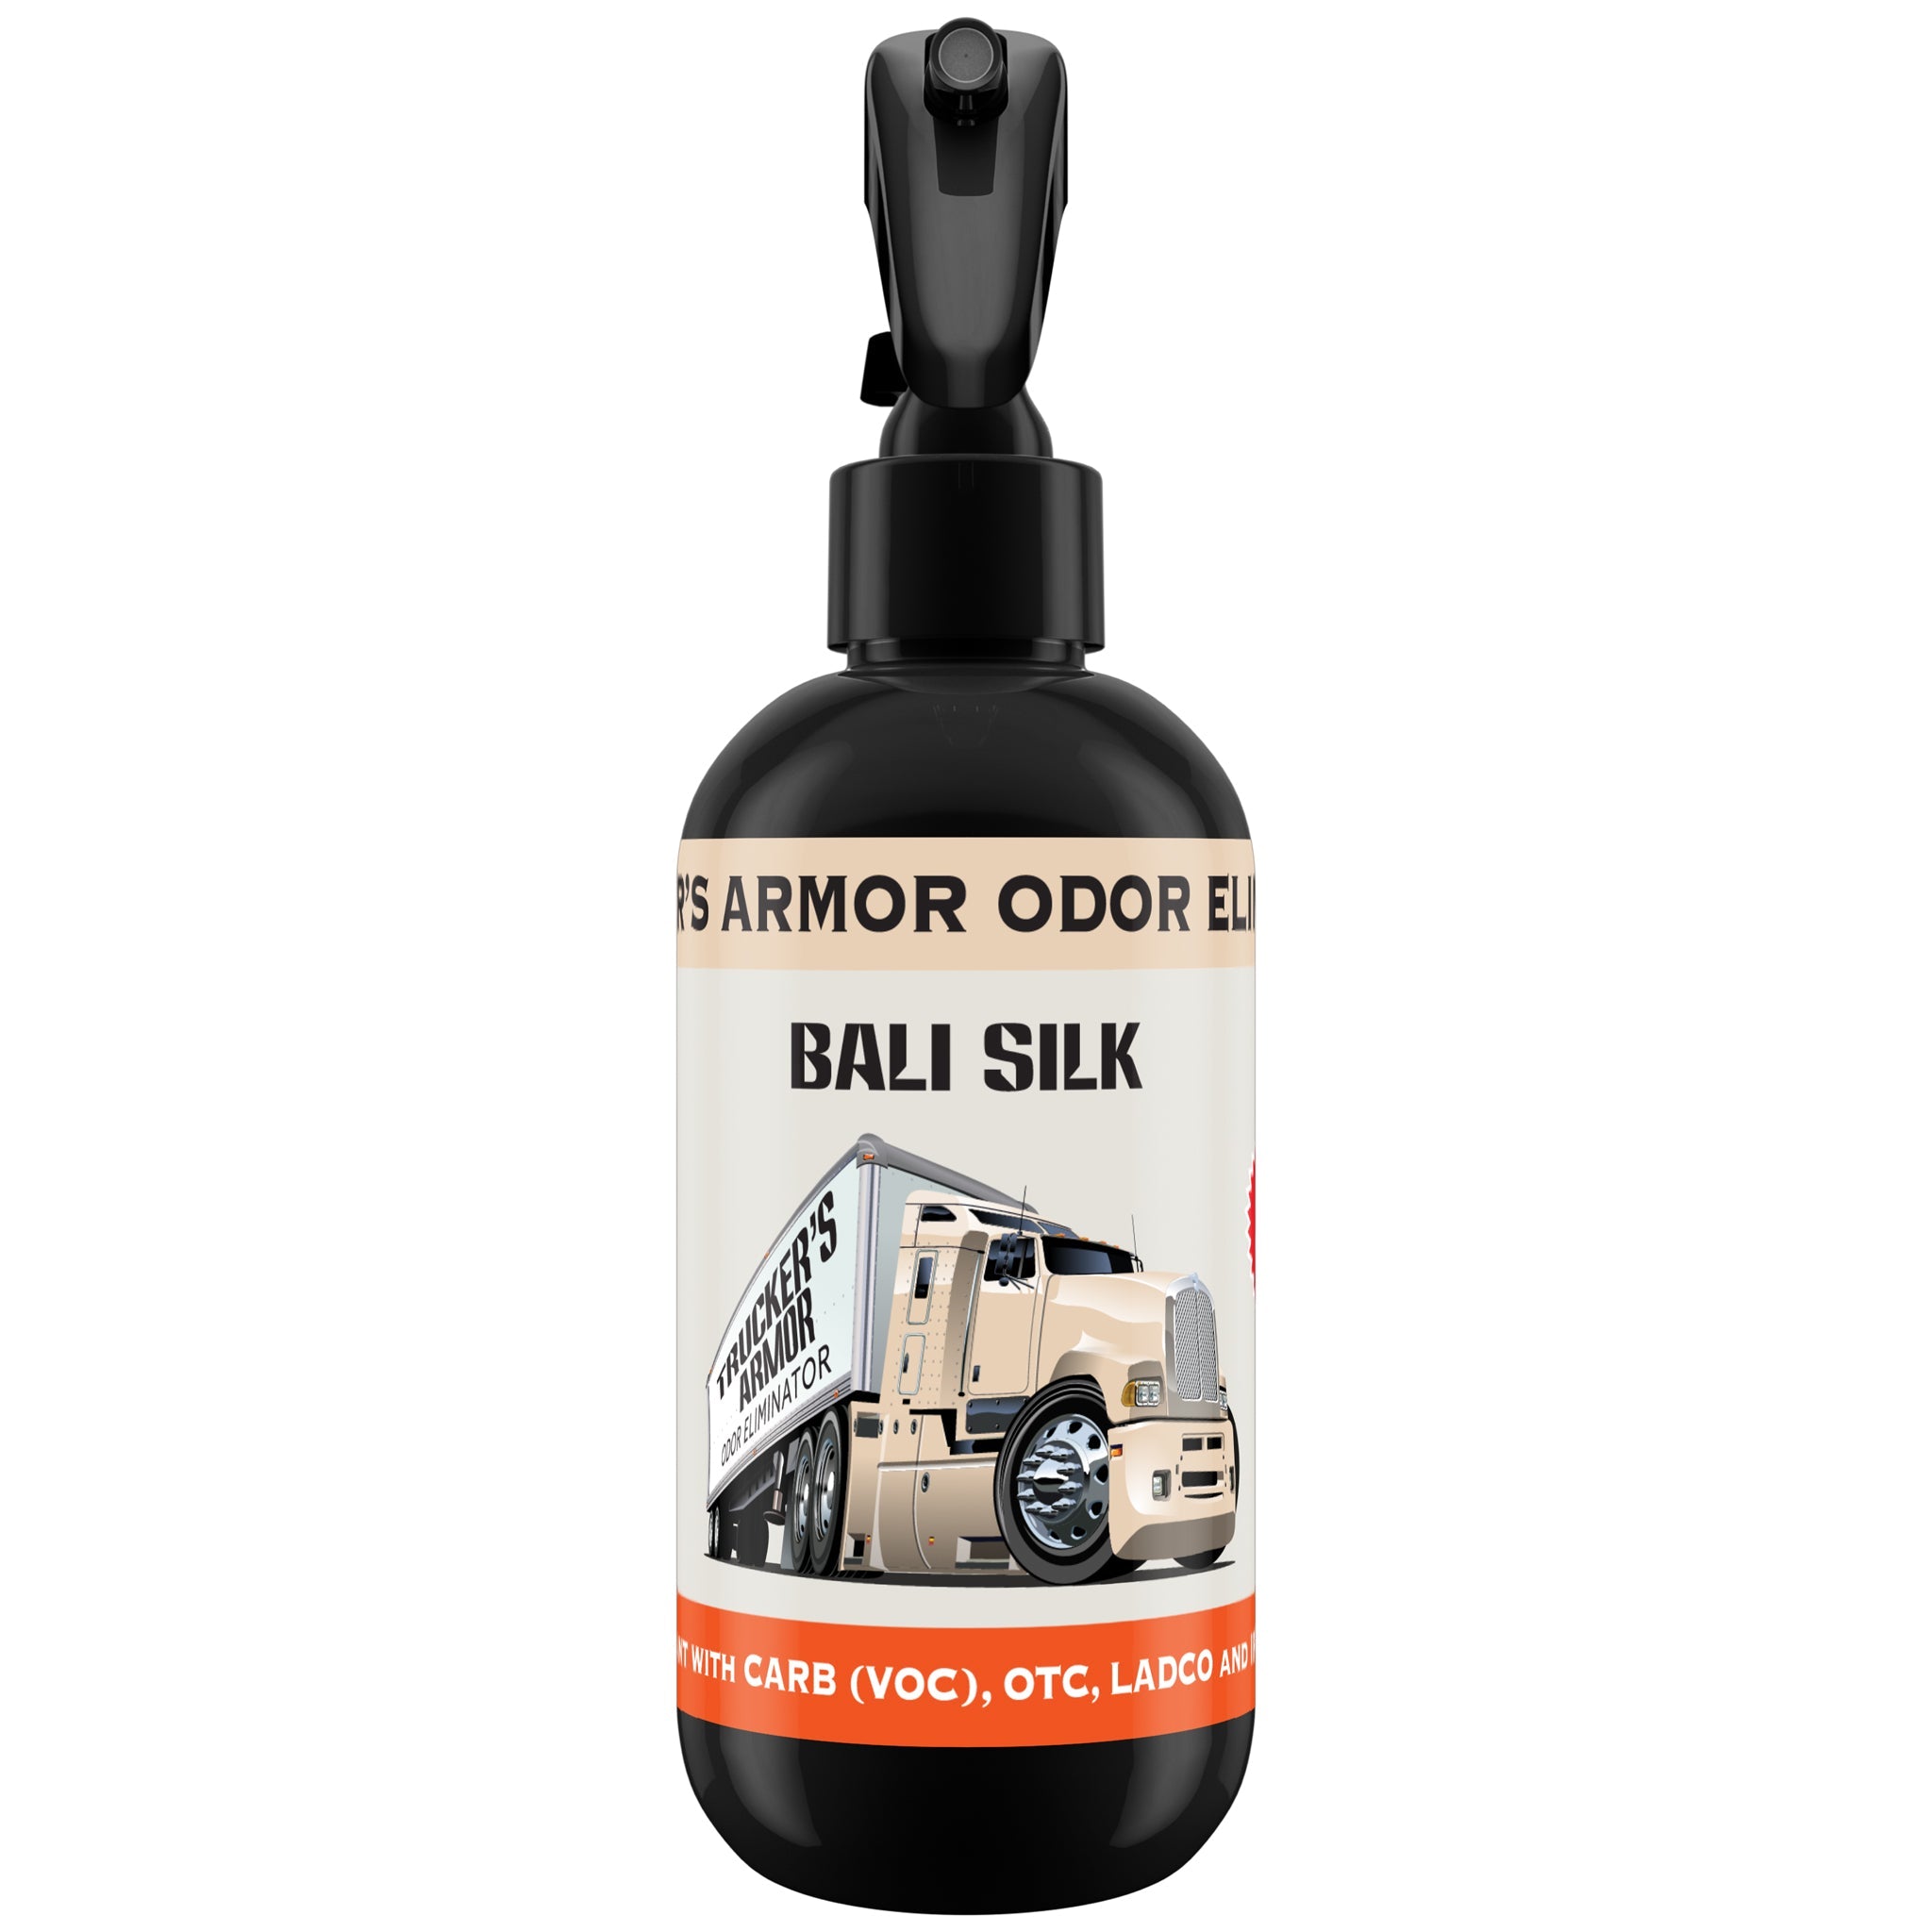 Trucker's Armor Odor Eliminator - Bali Silk Scent